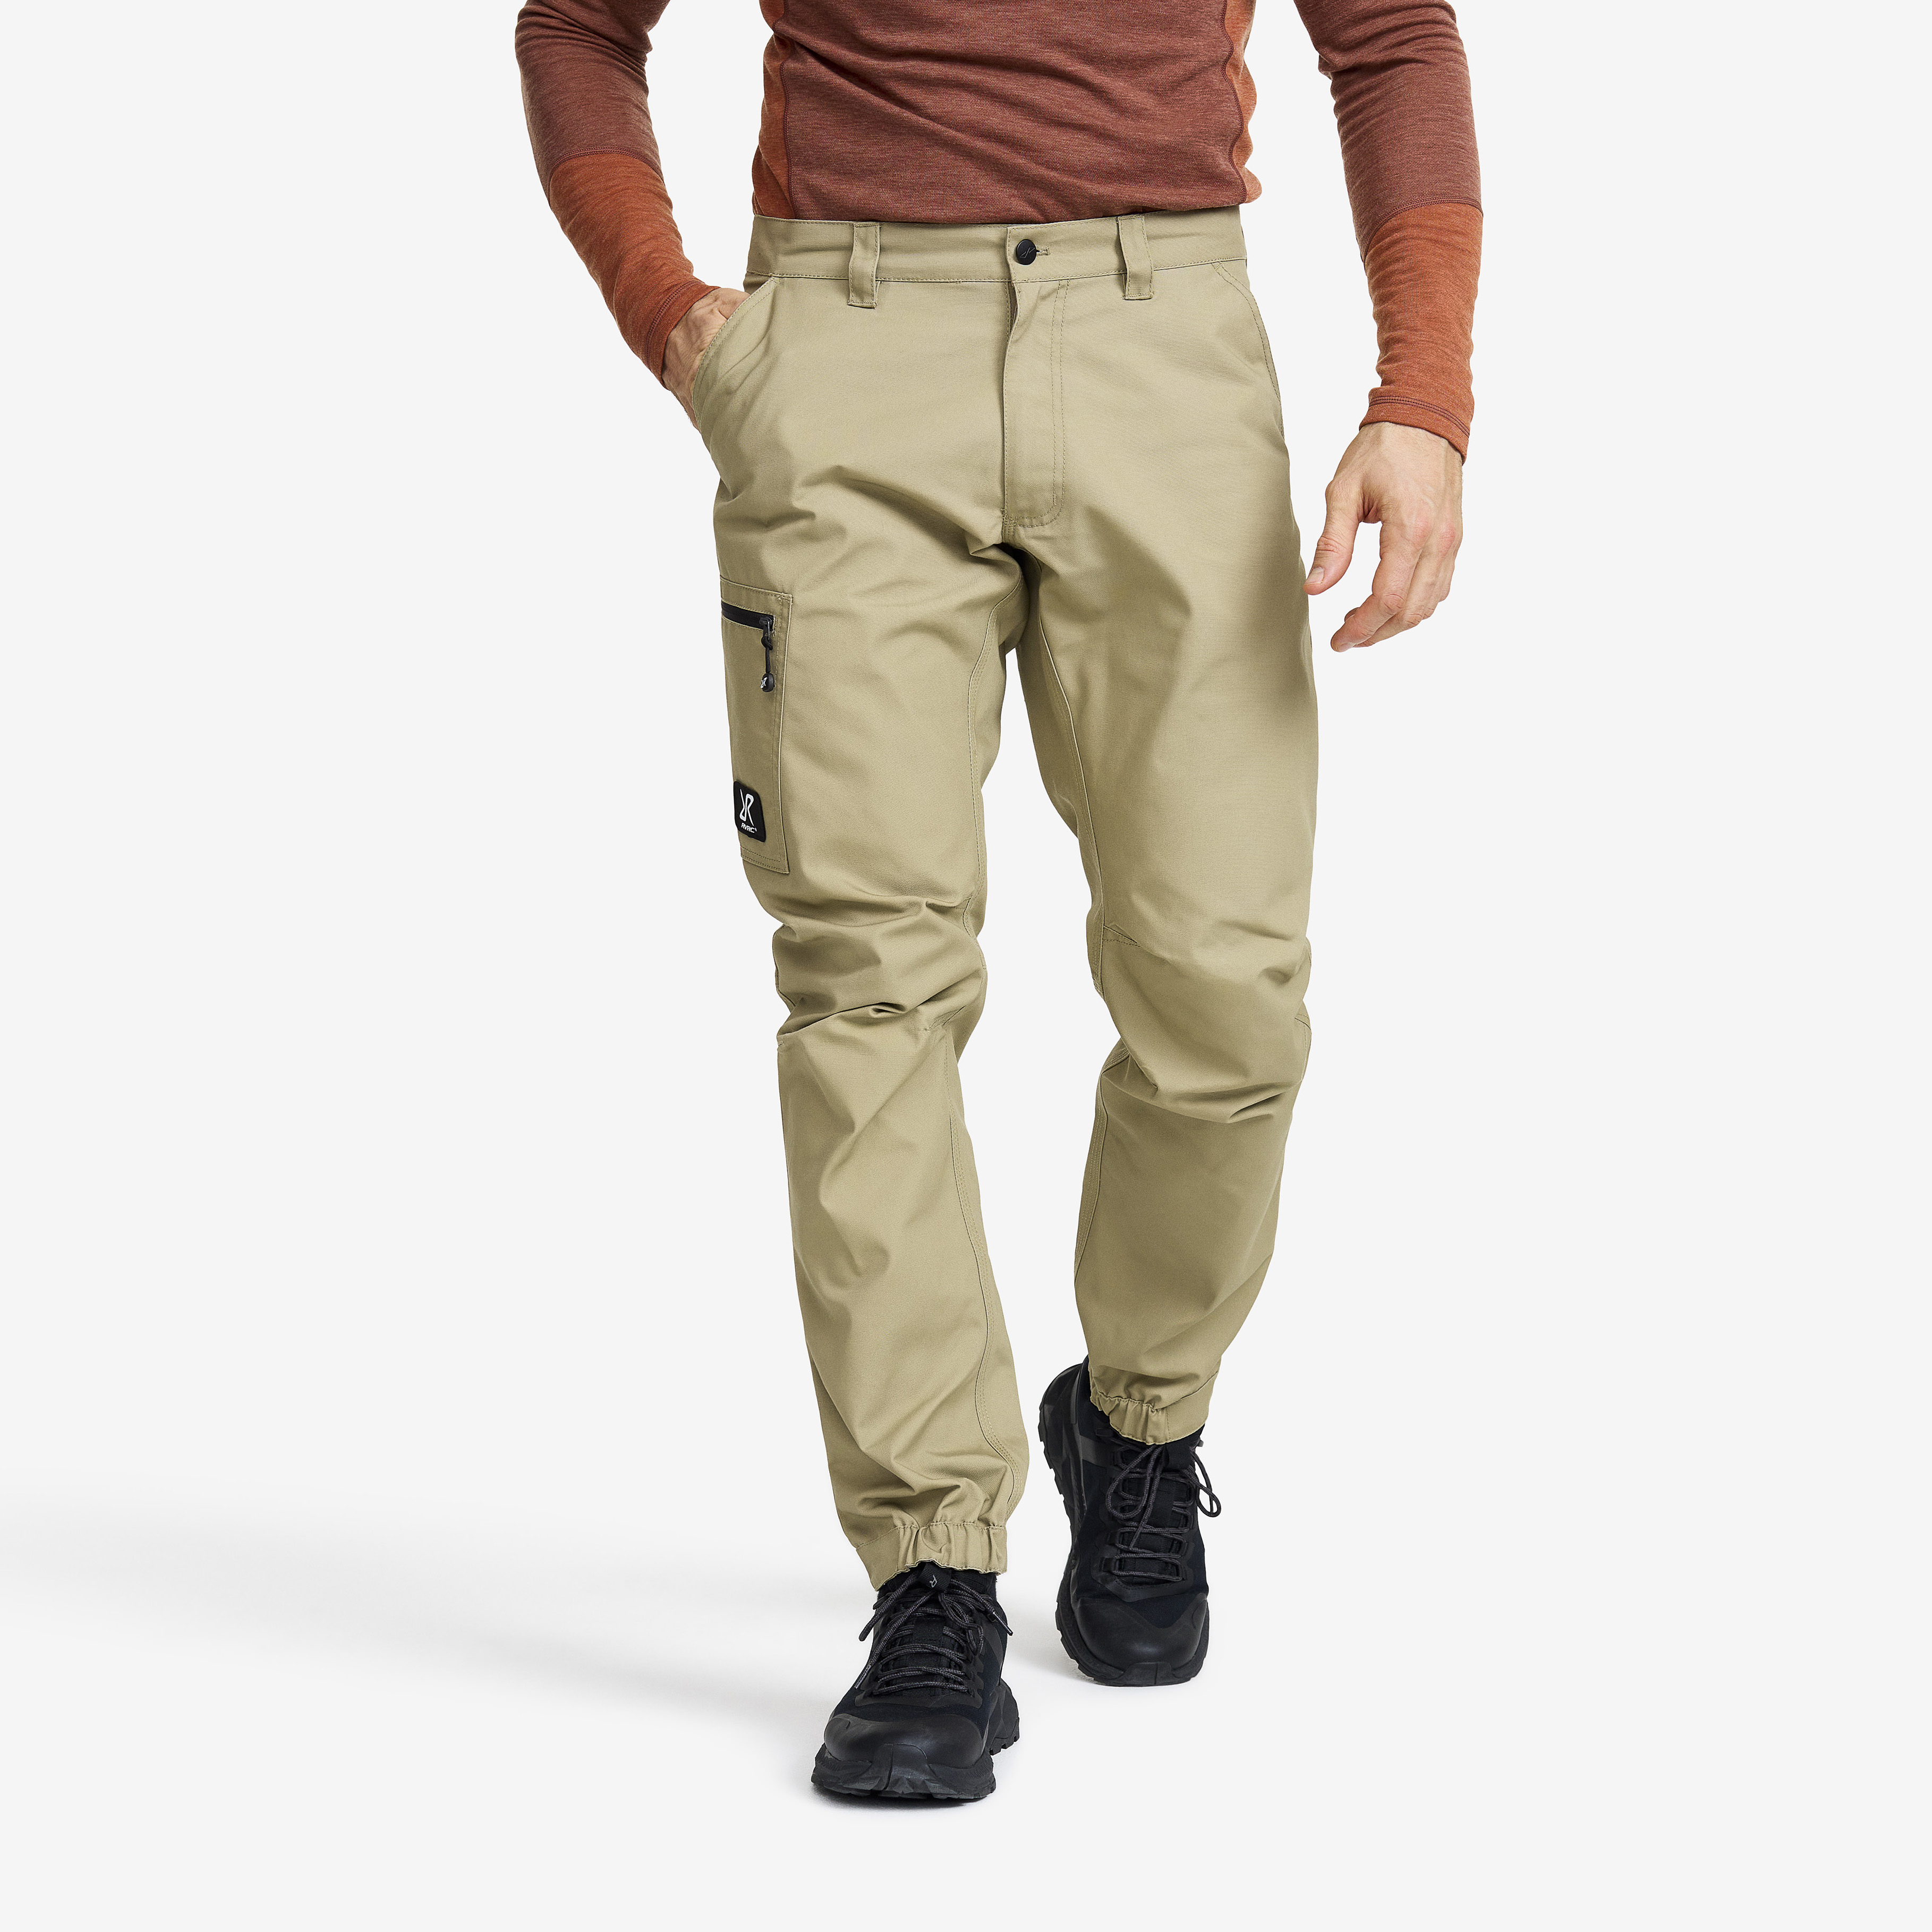 Outdoor Basic Pants Khaki Hombres